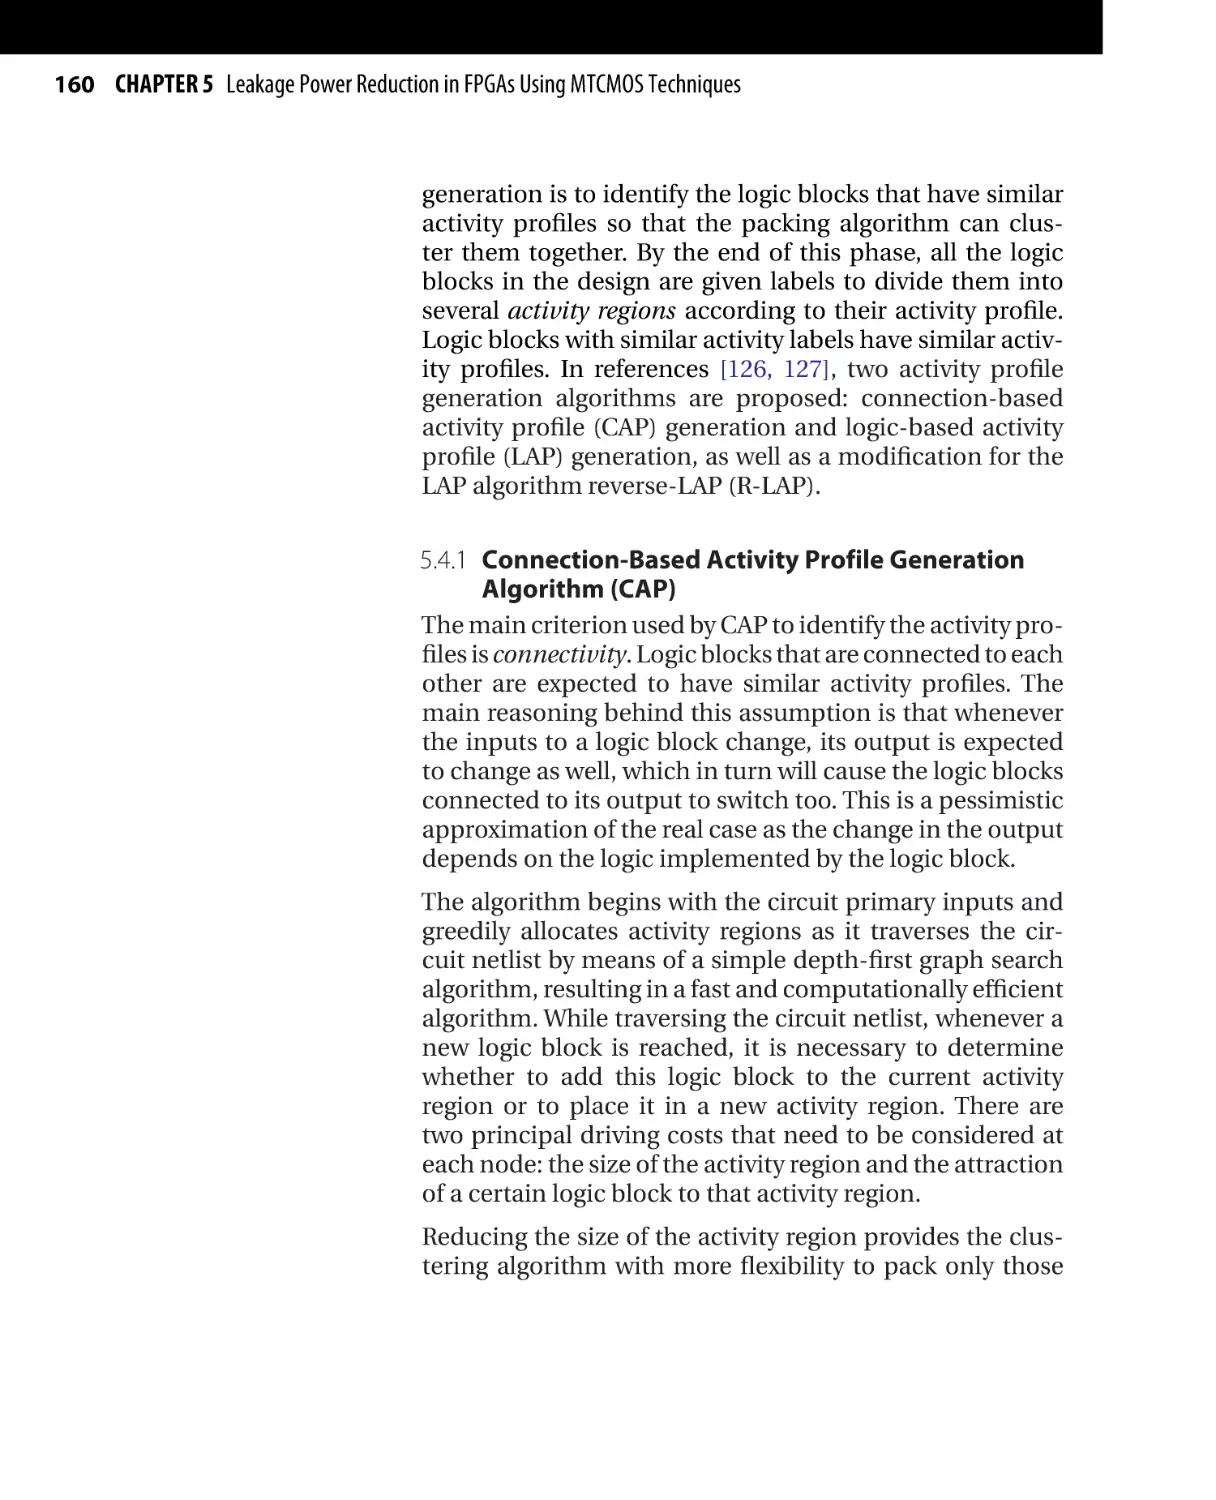 Connection-Based Activity Profile GenerationAlgorithm (CAP)